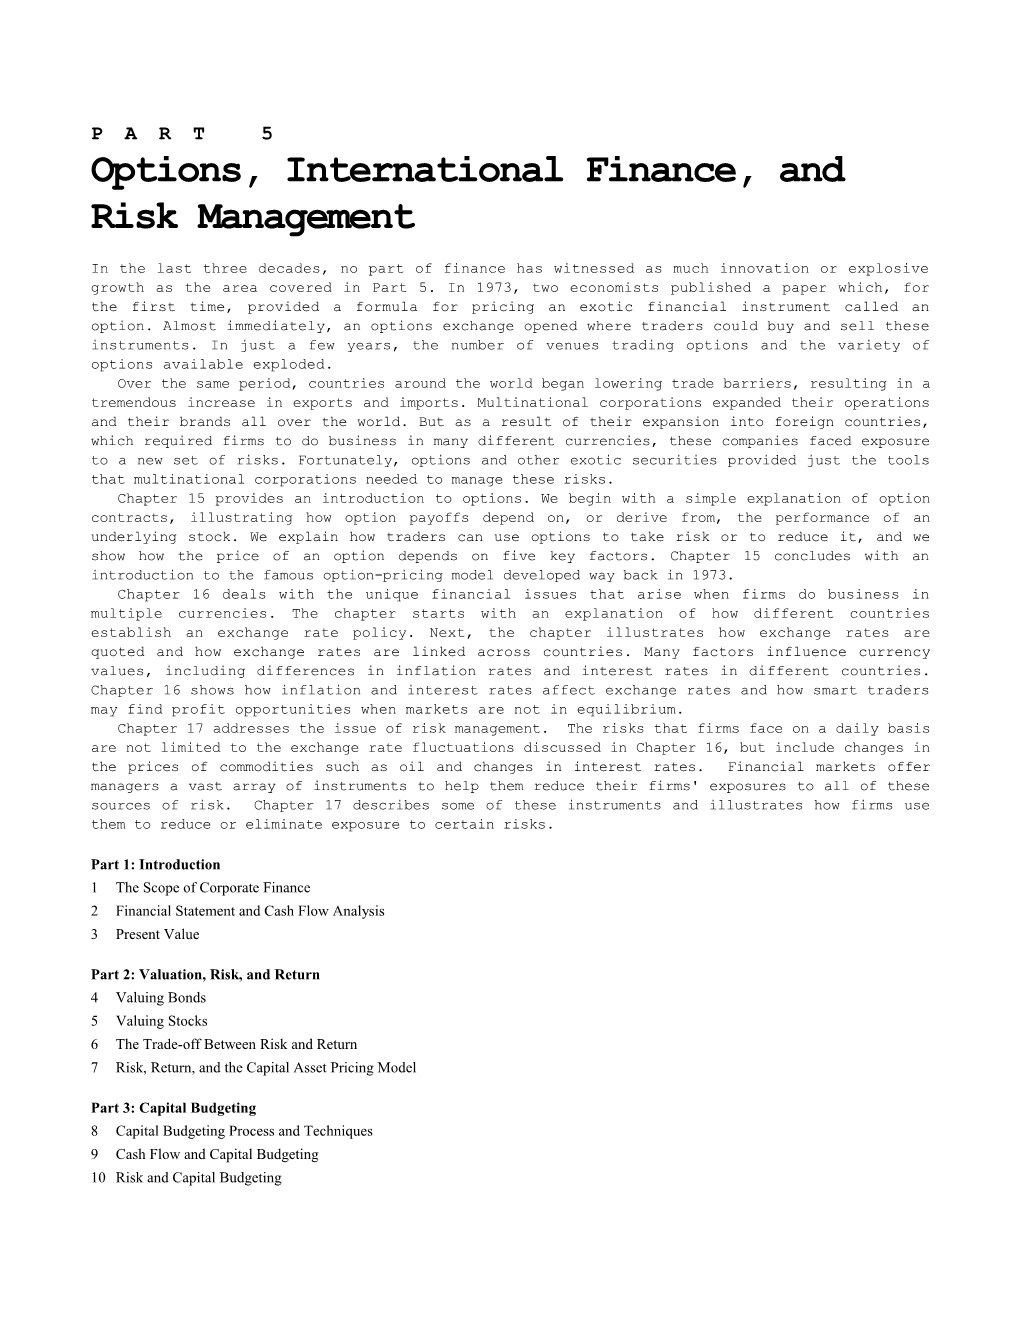 Options, International Finance, and Risk Management